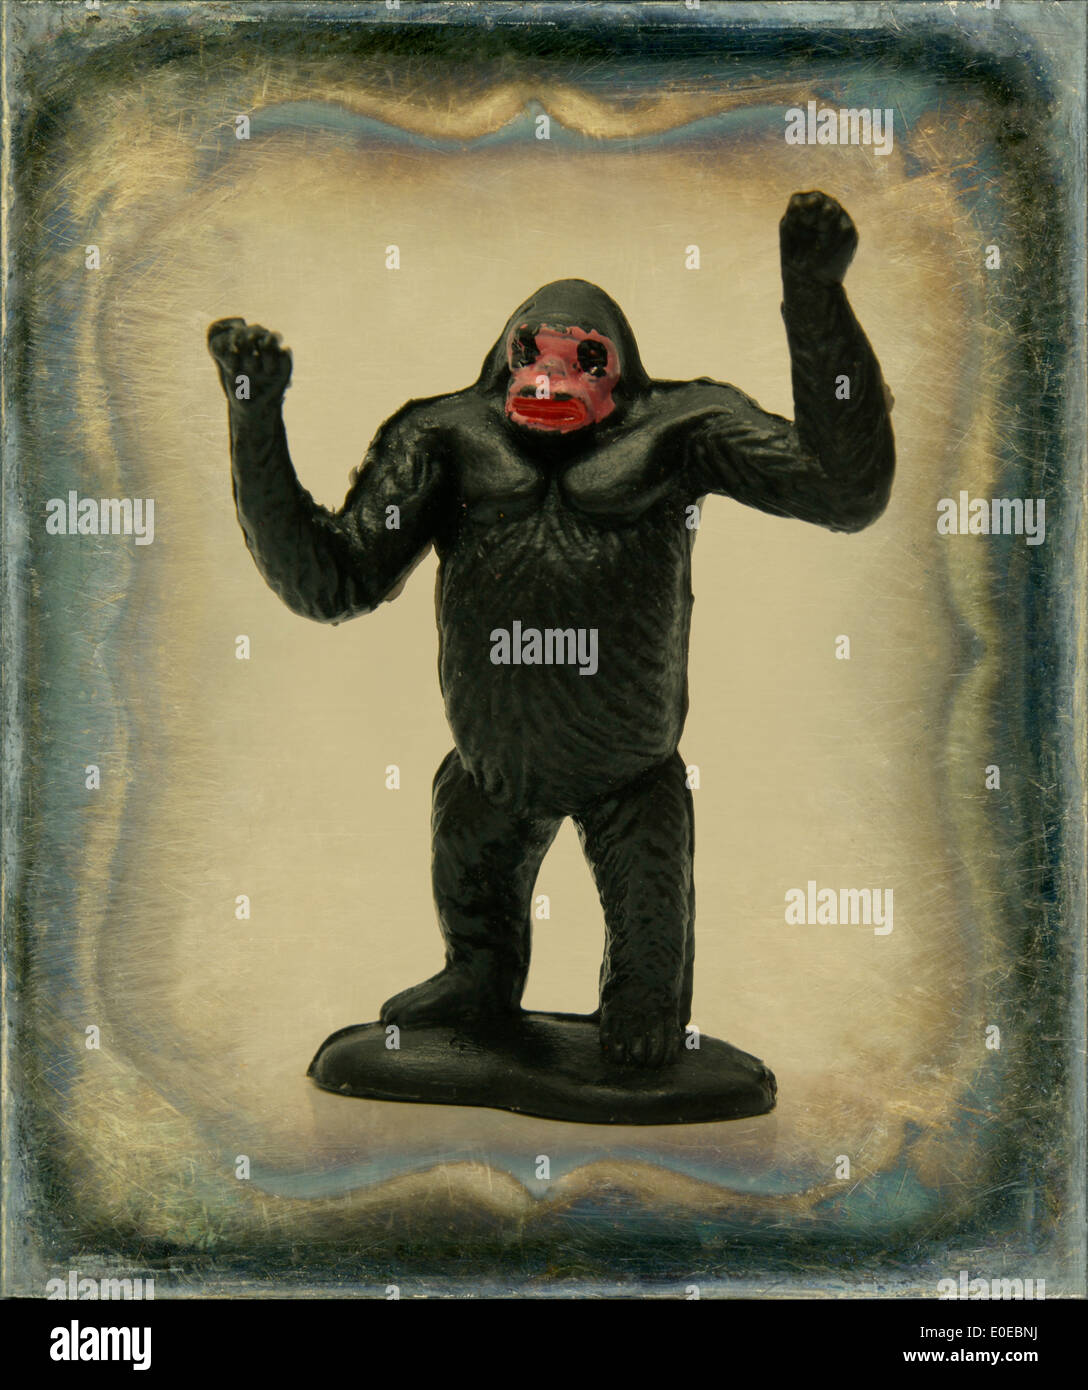 Gorilla figurine. Stock Photo